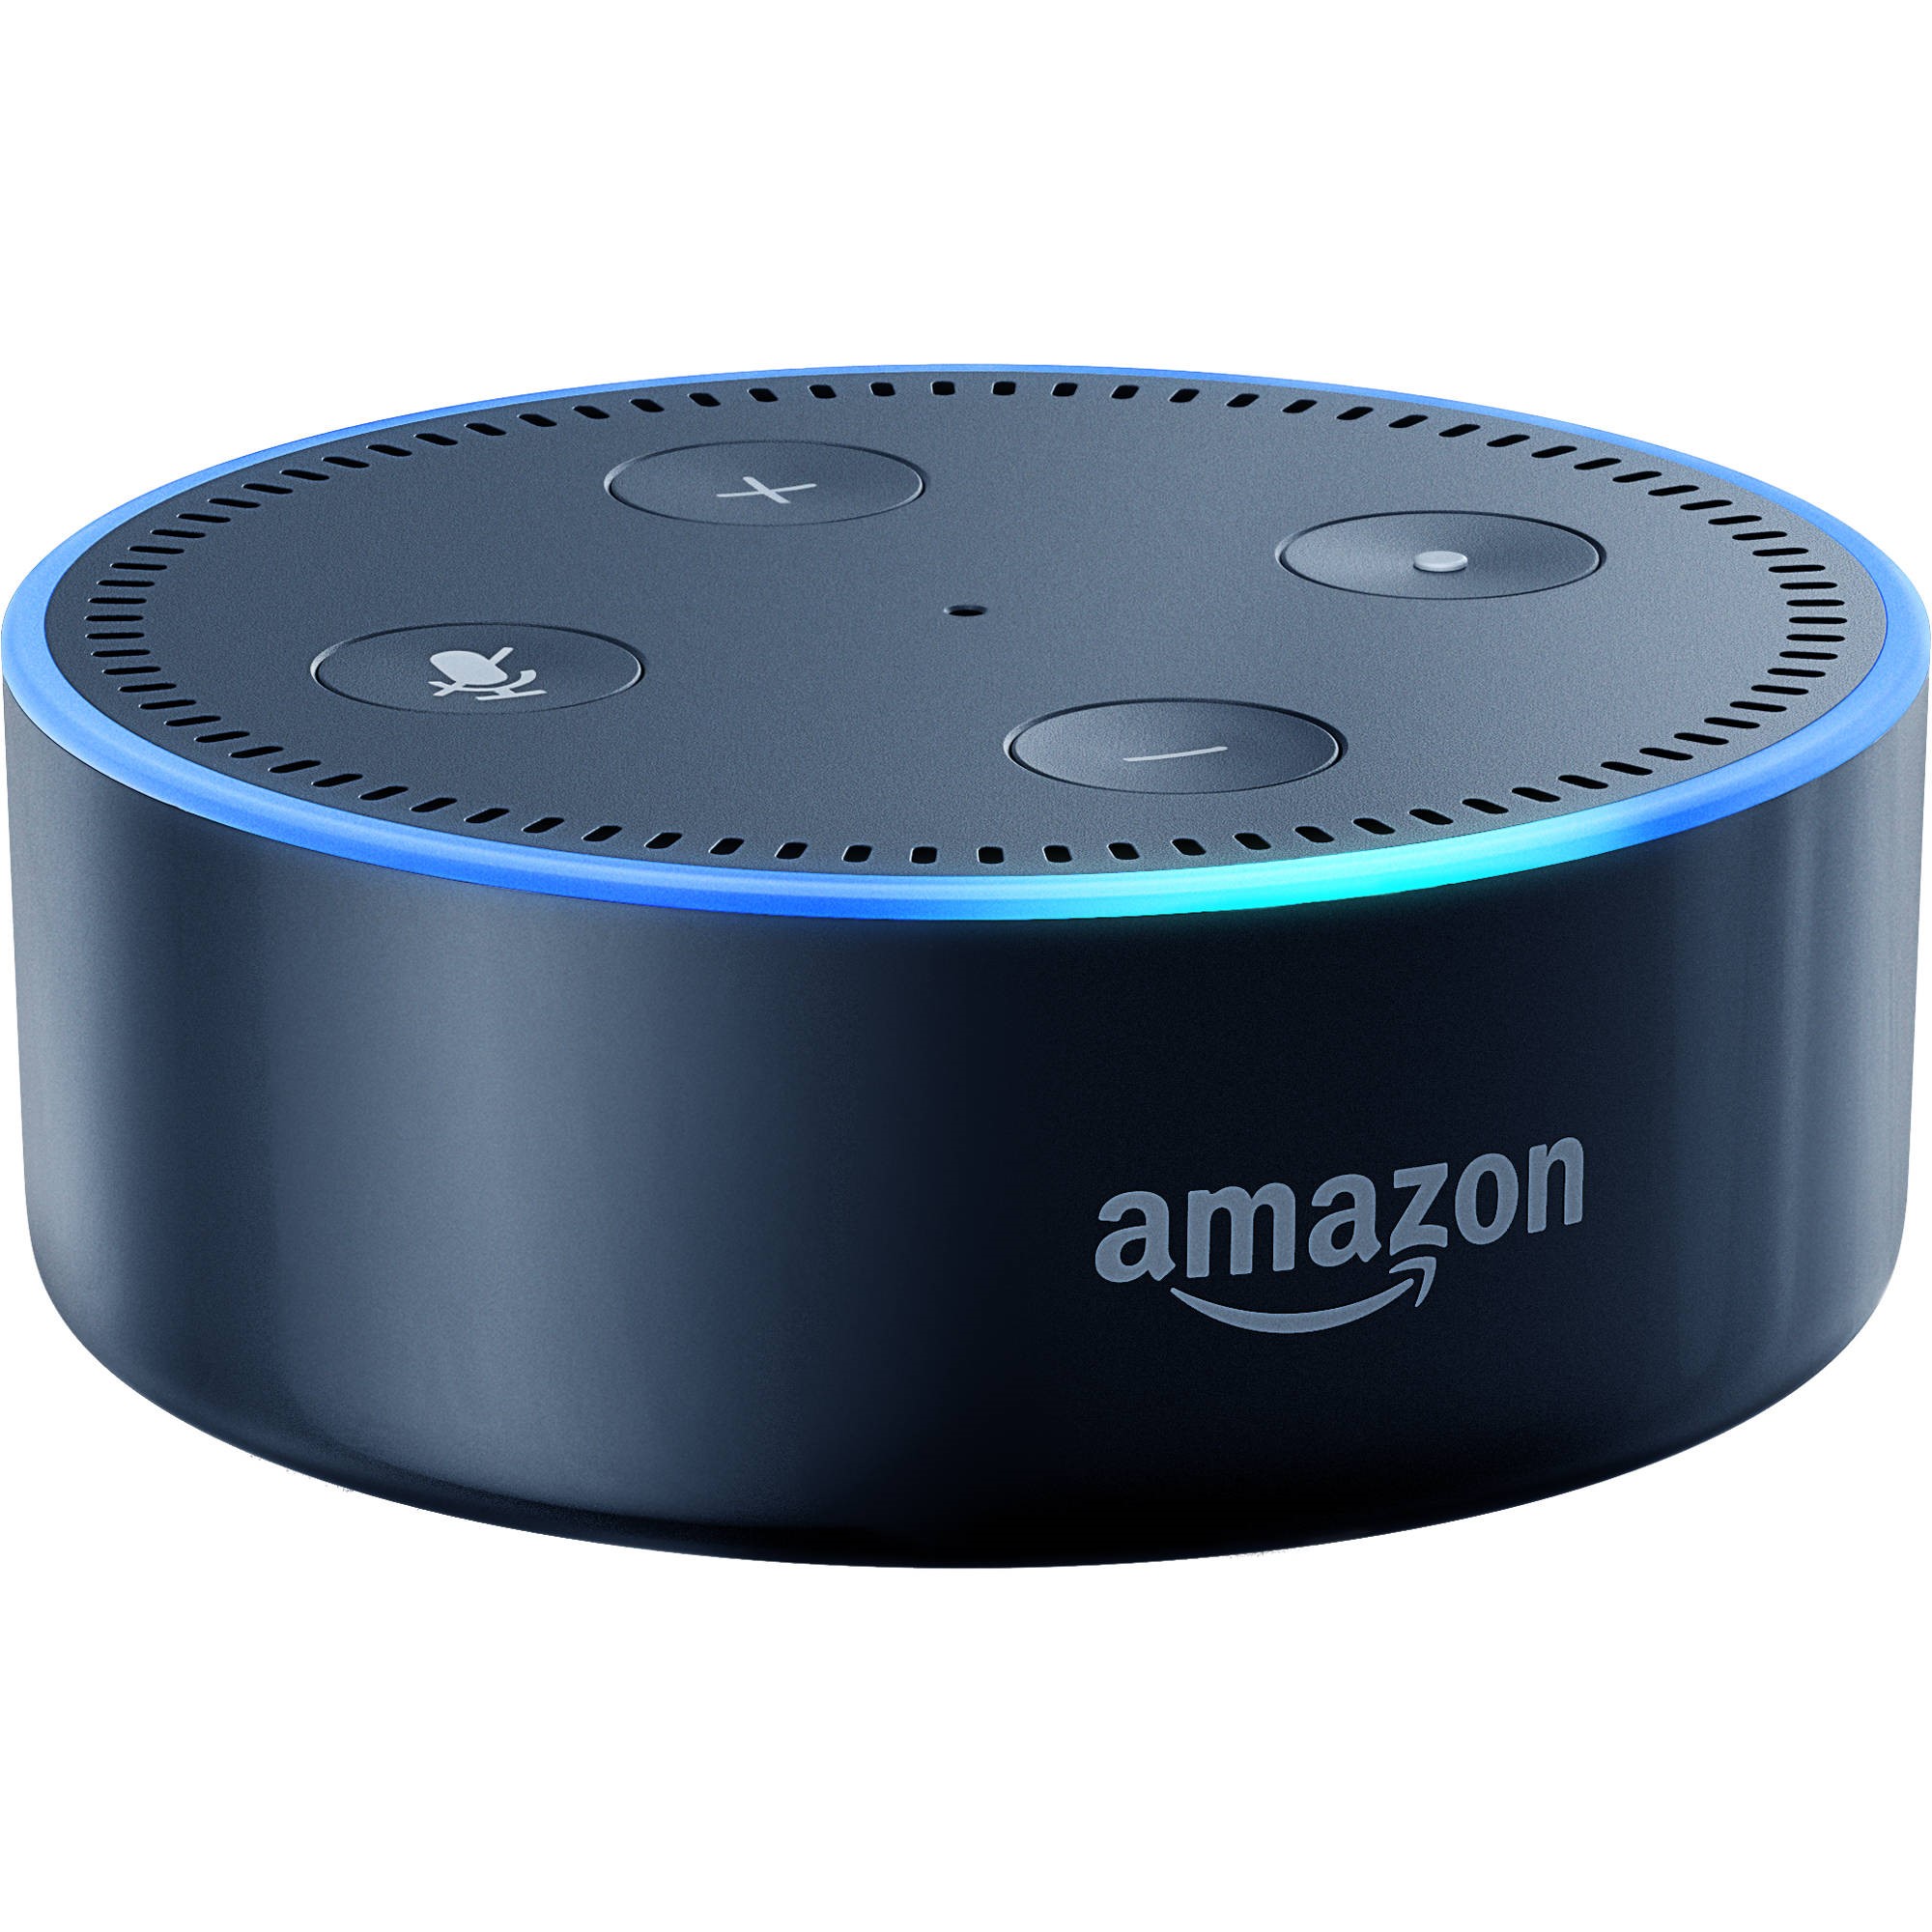 Рис.4. Amazon Echo Dot